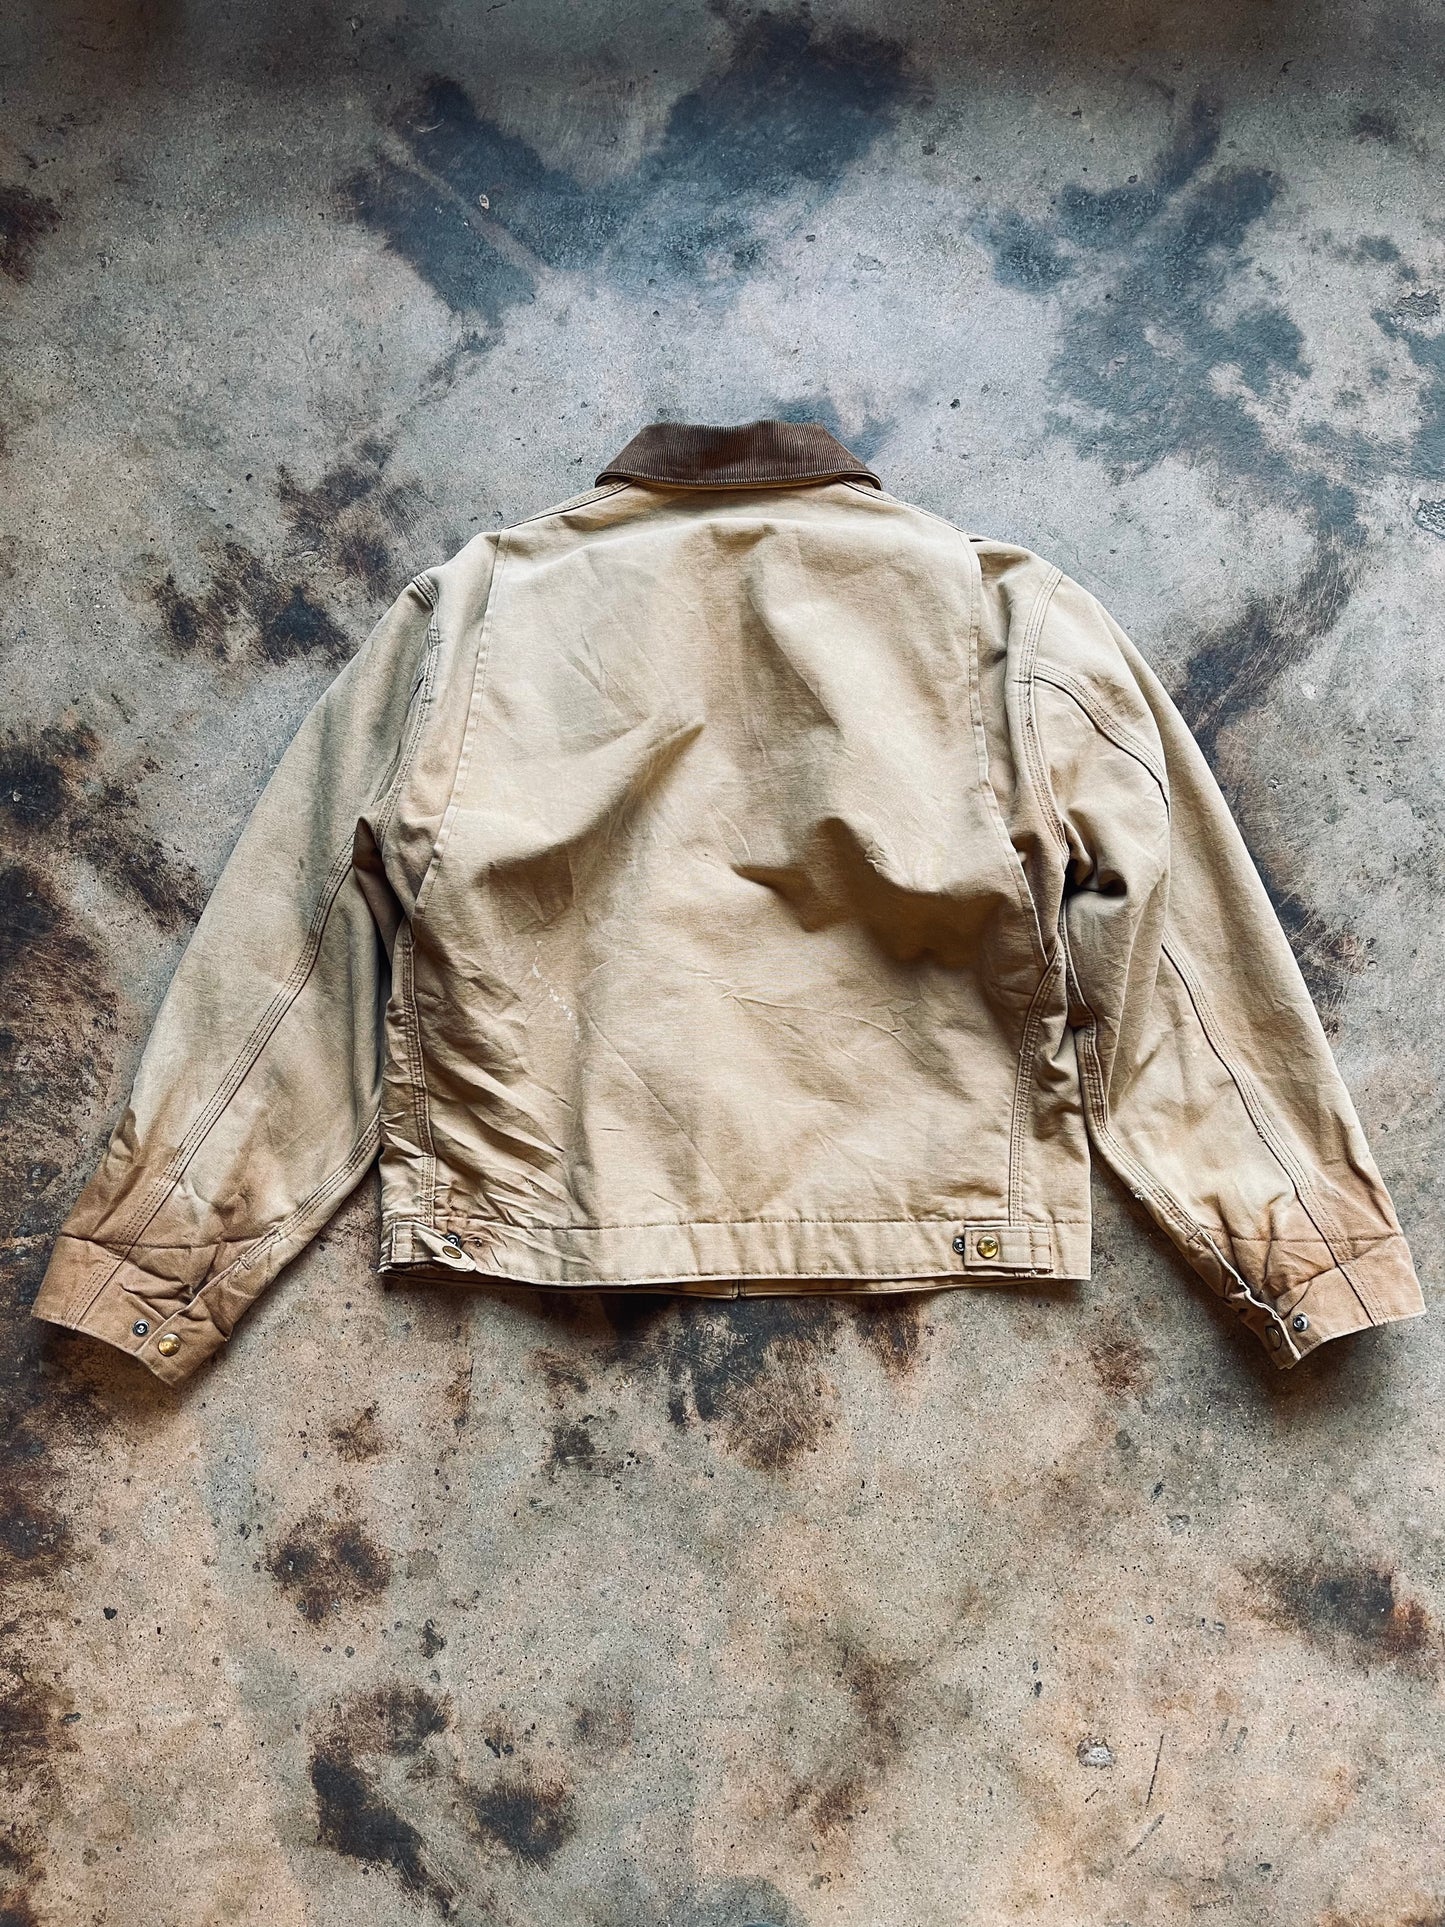 Vintage Carhartt Work Jacket